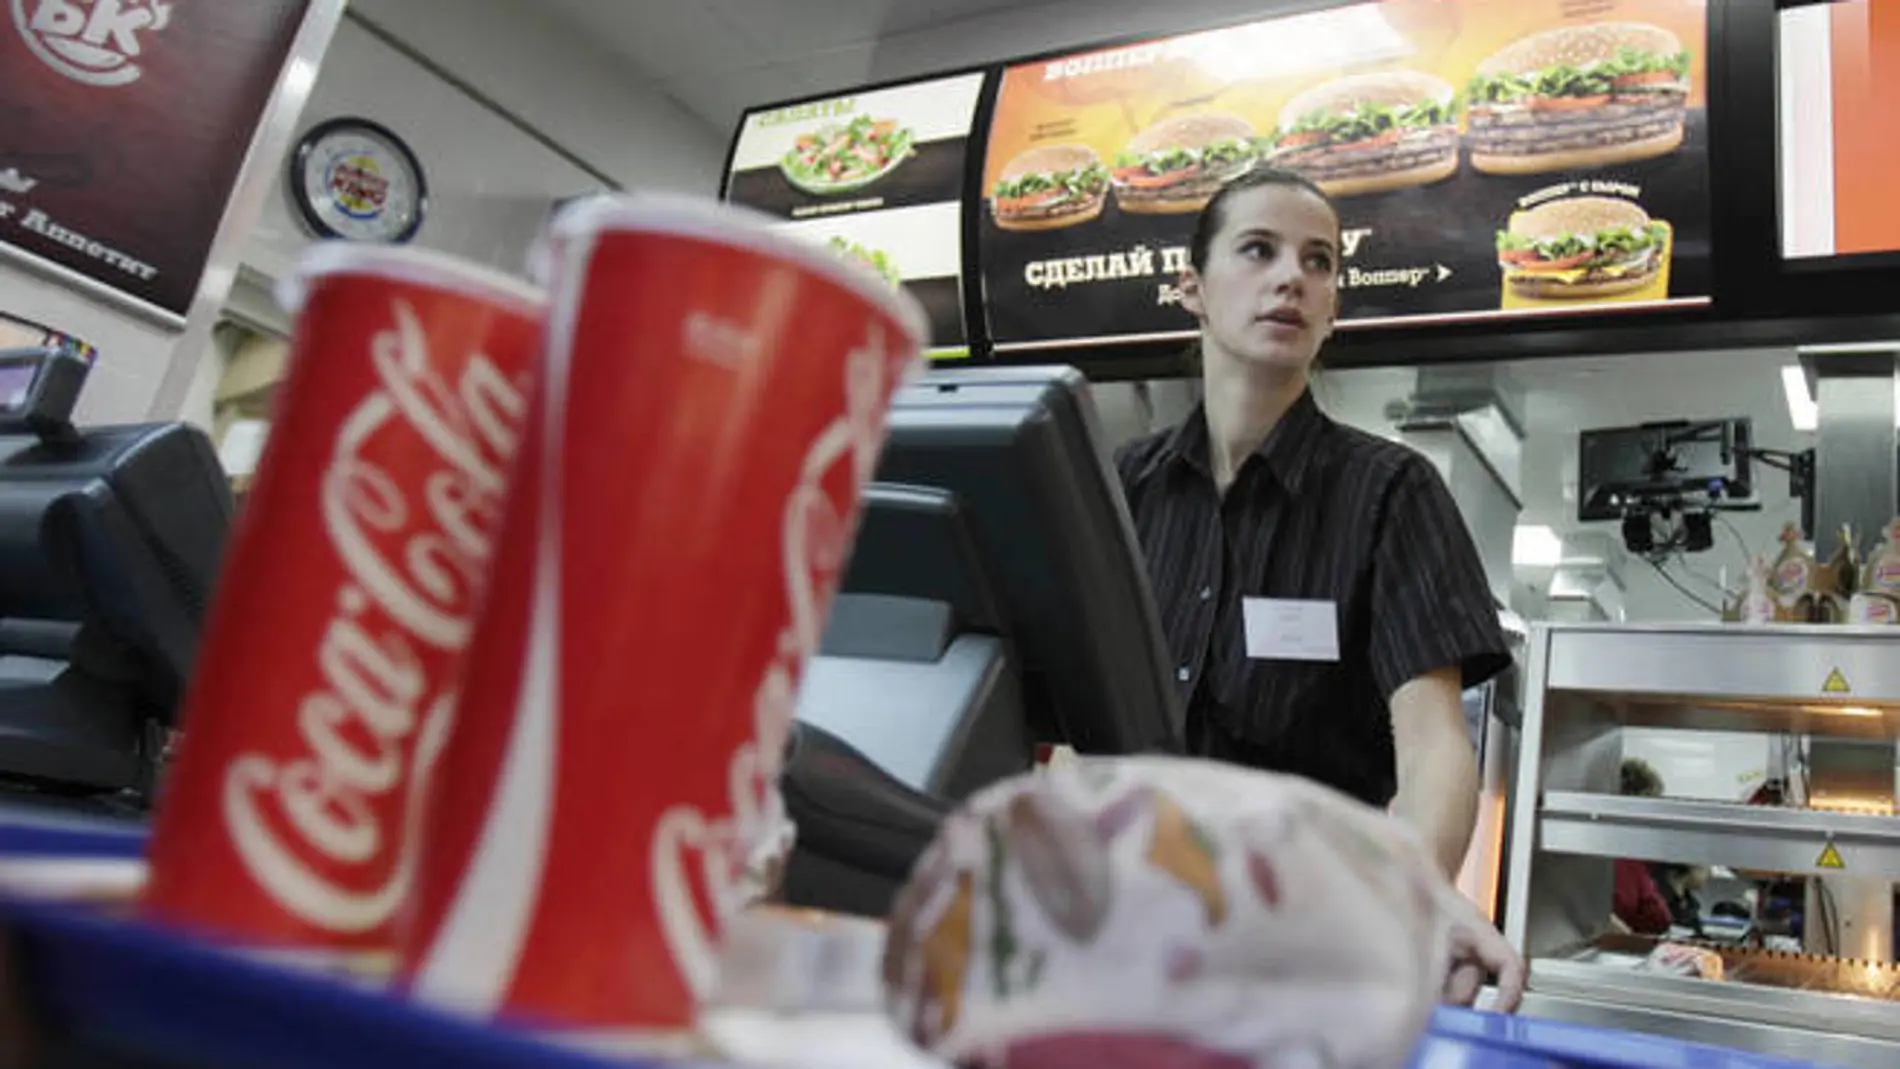 Una empleada de Burger King sirve menús